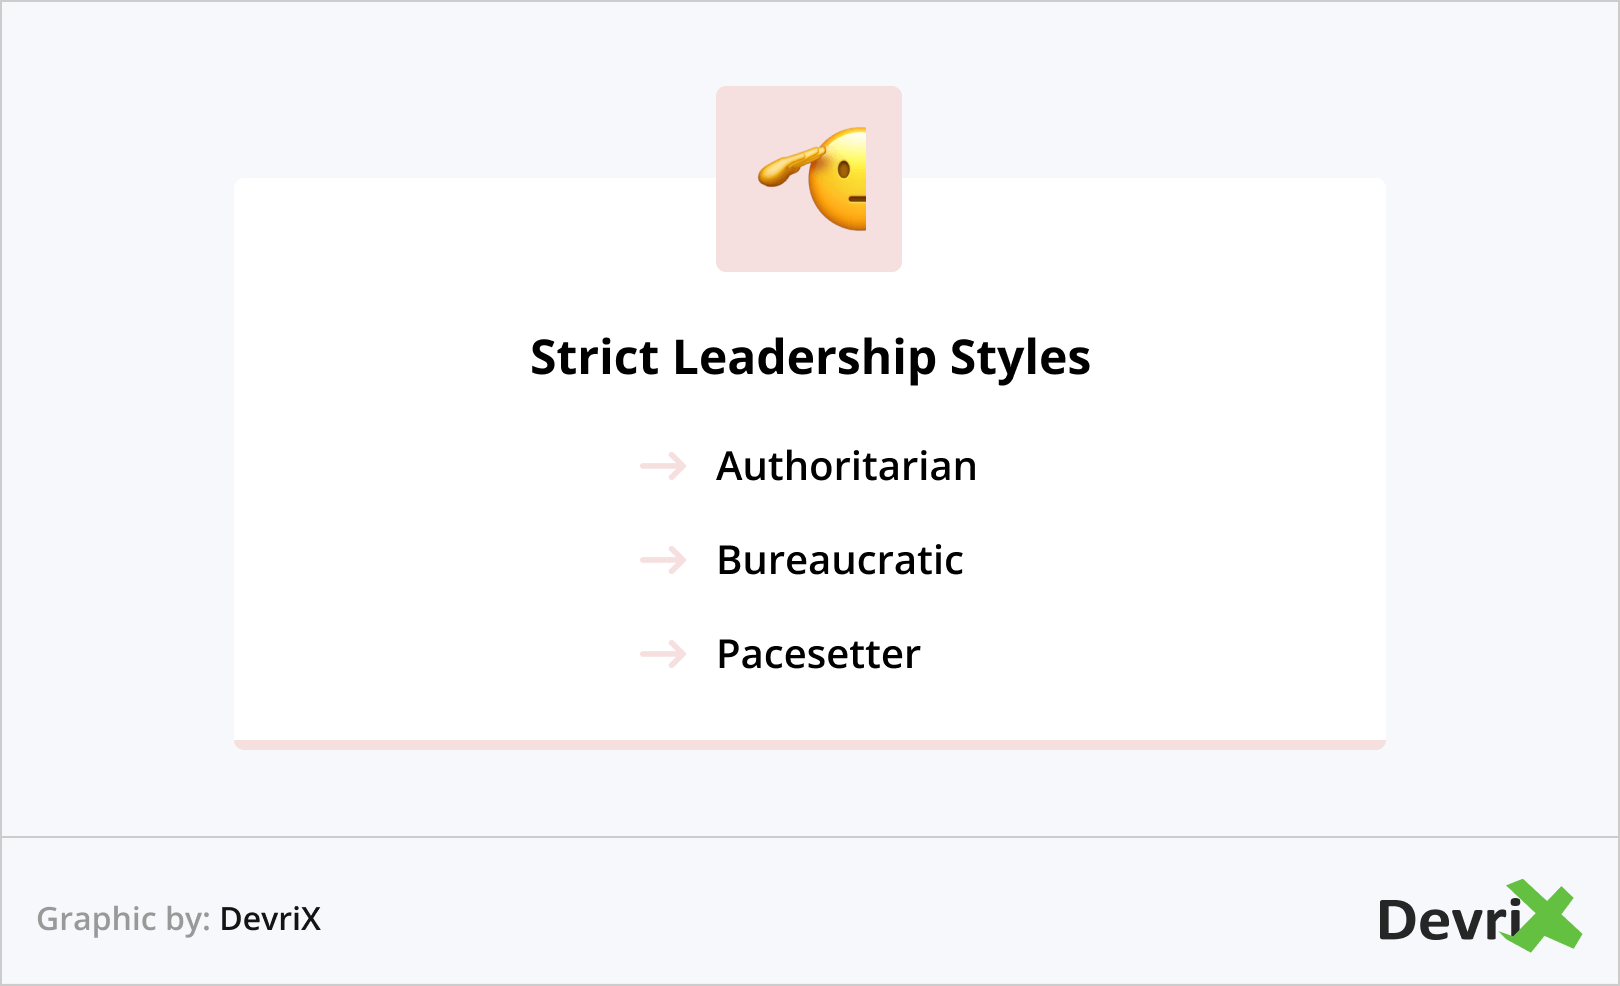 Strict Leadership Styles